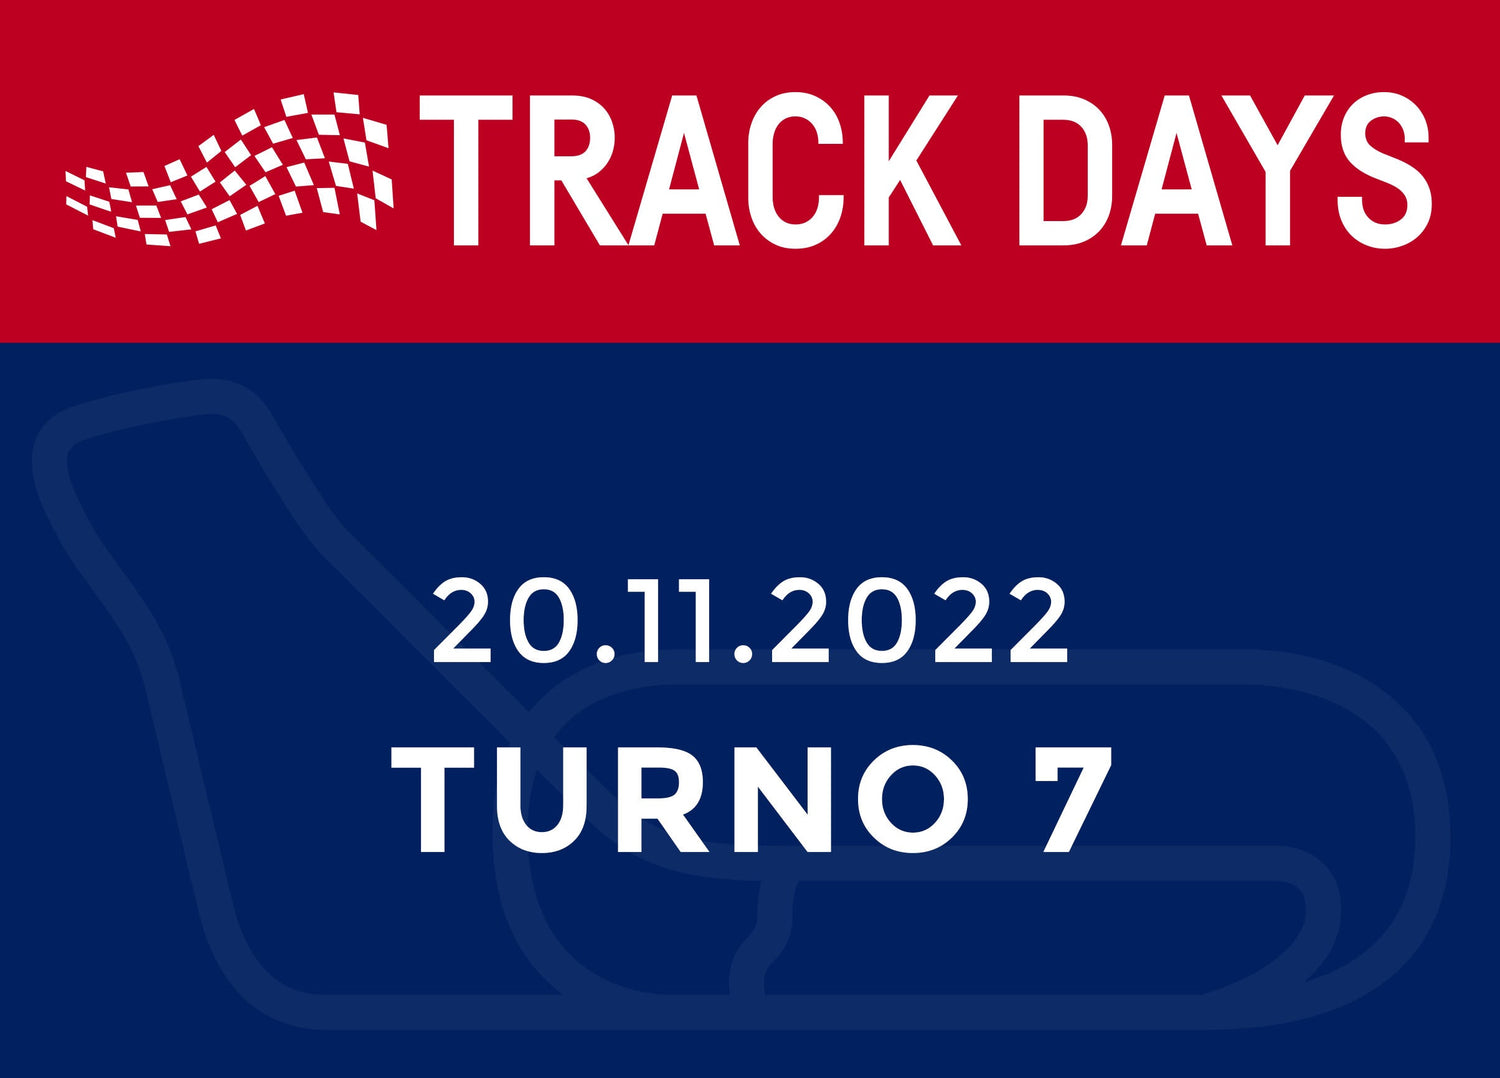 TRACK DAYS 20.11.22 TURNO 7